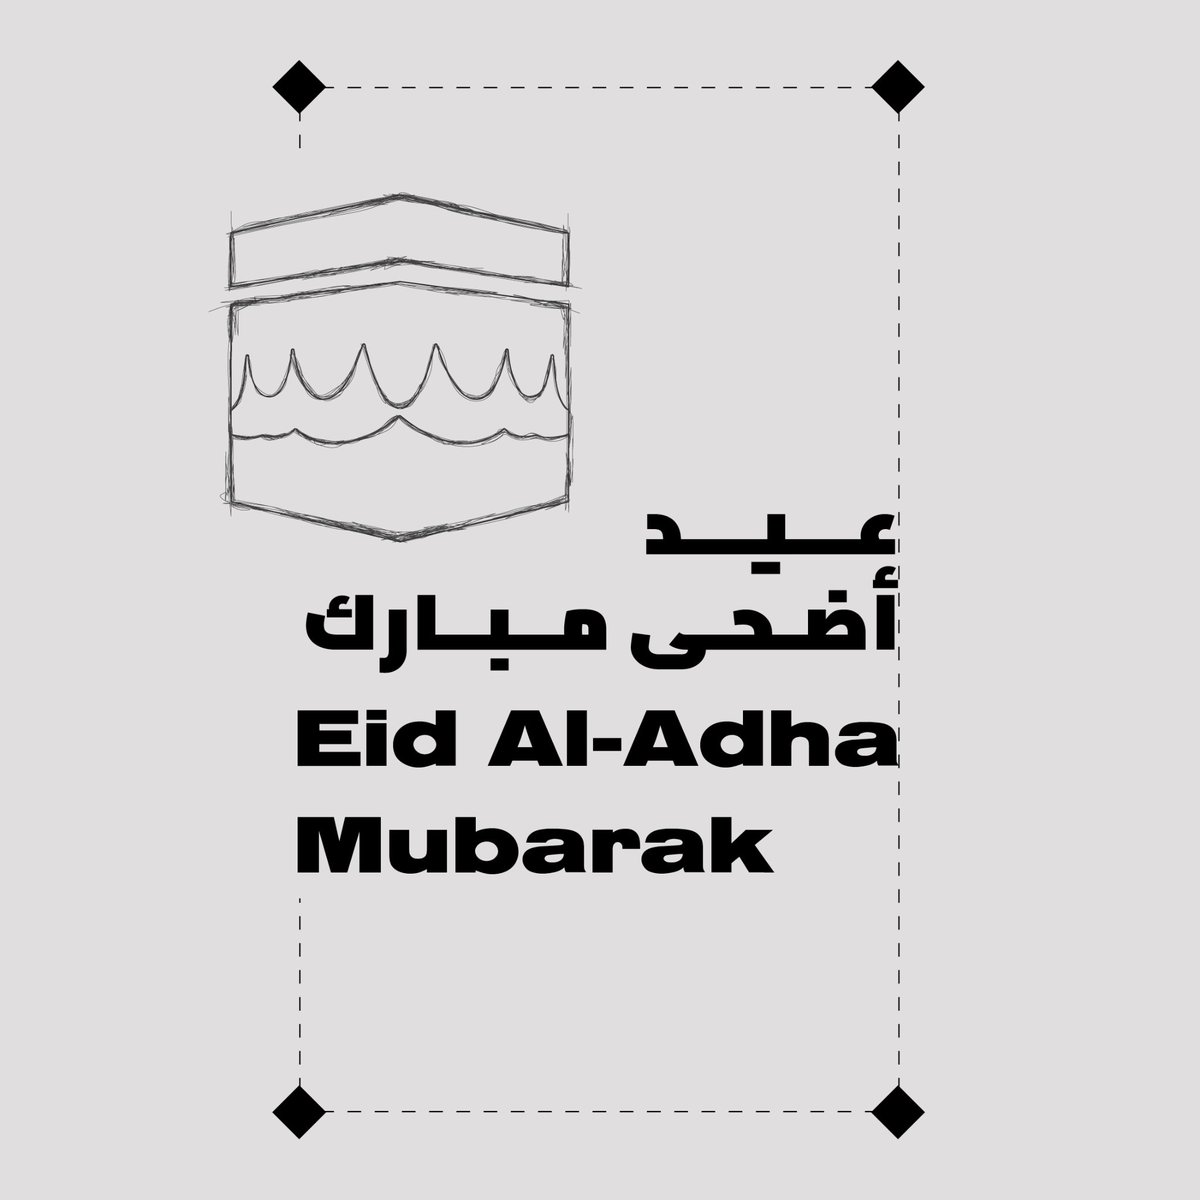 We would like to wish you a blessed, joyous, and peaceful Eid Al Adha from our team at The NYU Abu Dhabi Art Gallery.

#EidAlAdha #NYUADArtGallery #inabudhabi #ournyuad #mynyuad #saadiyat #saadiyatisland